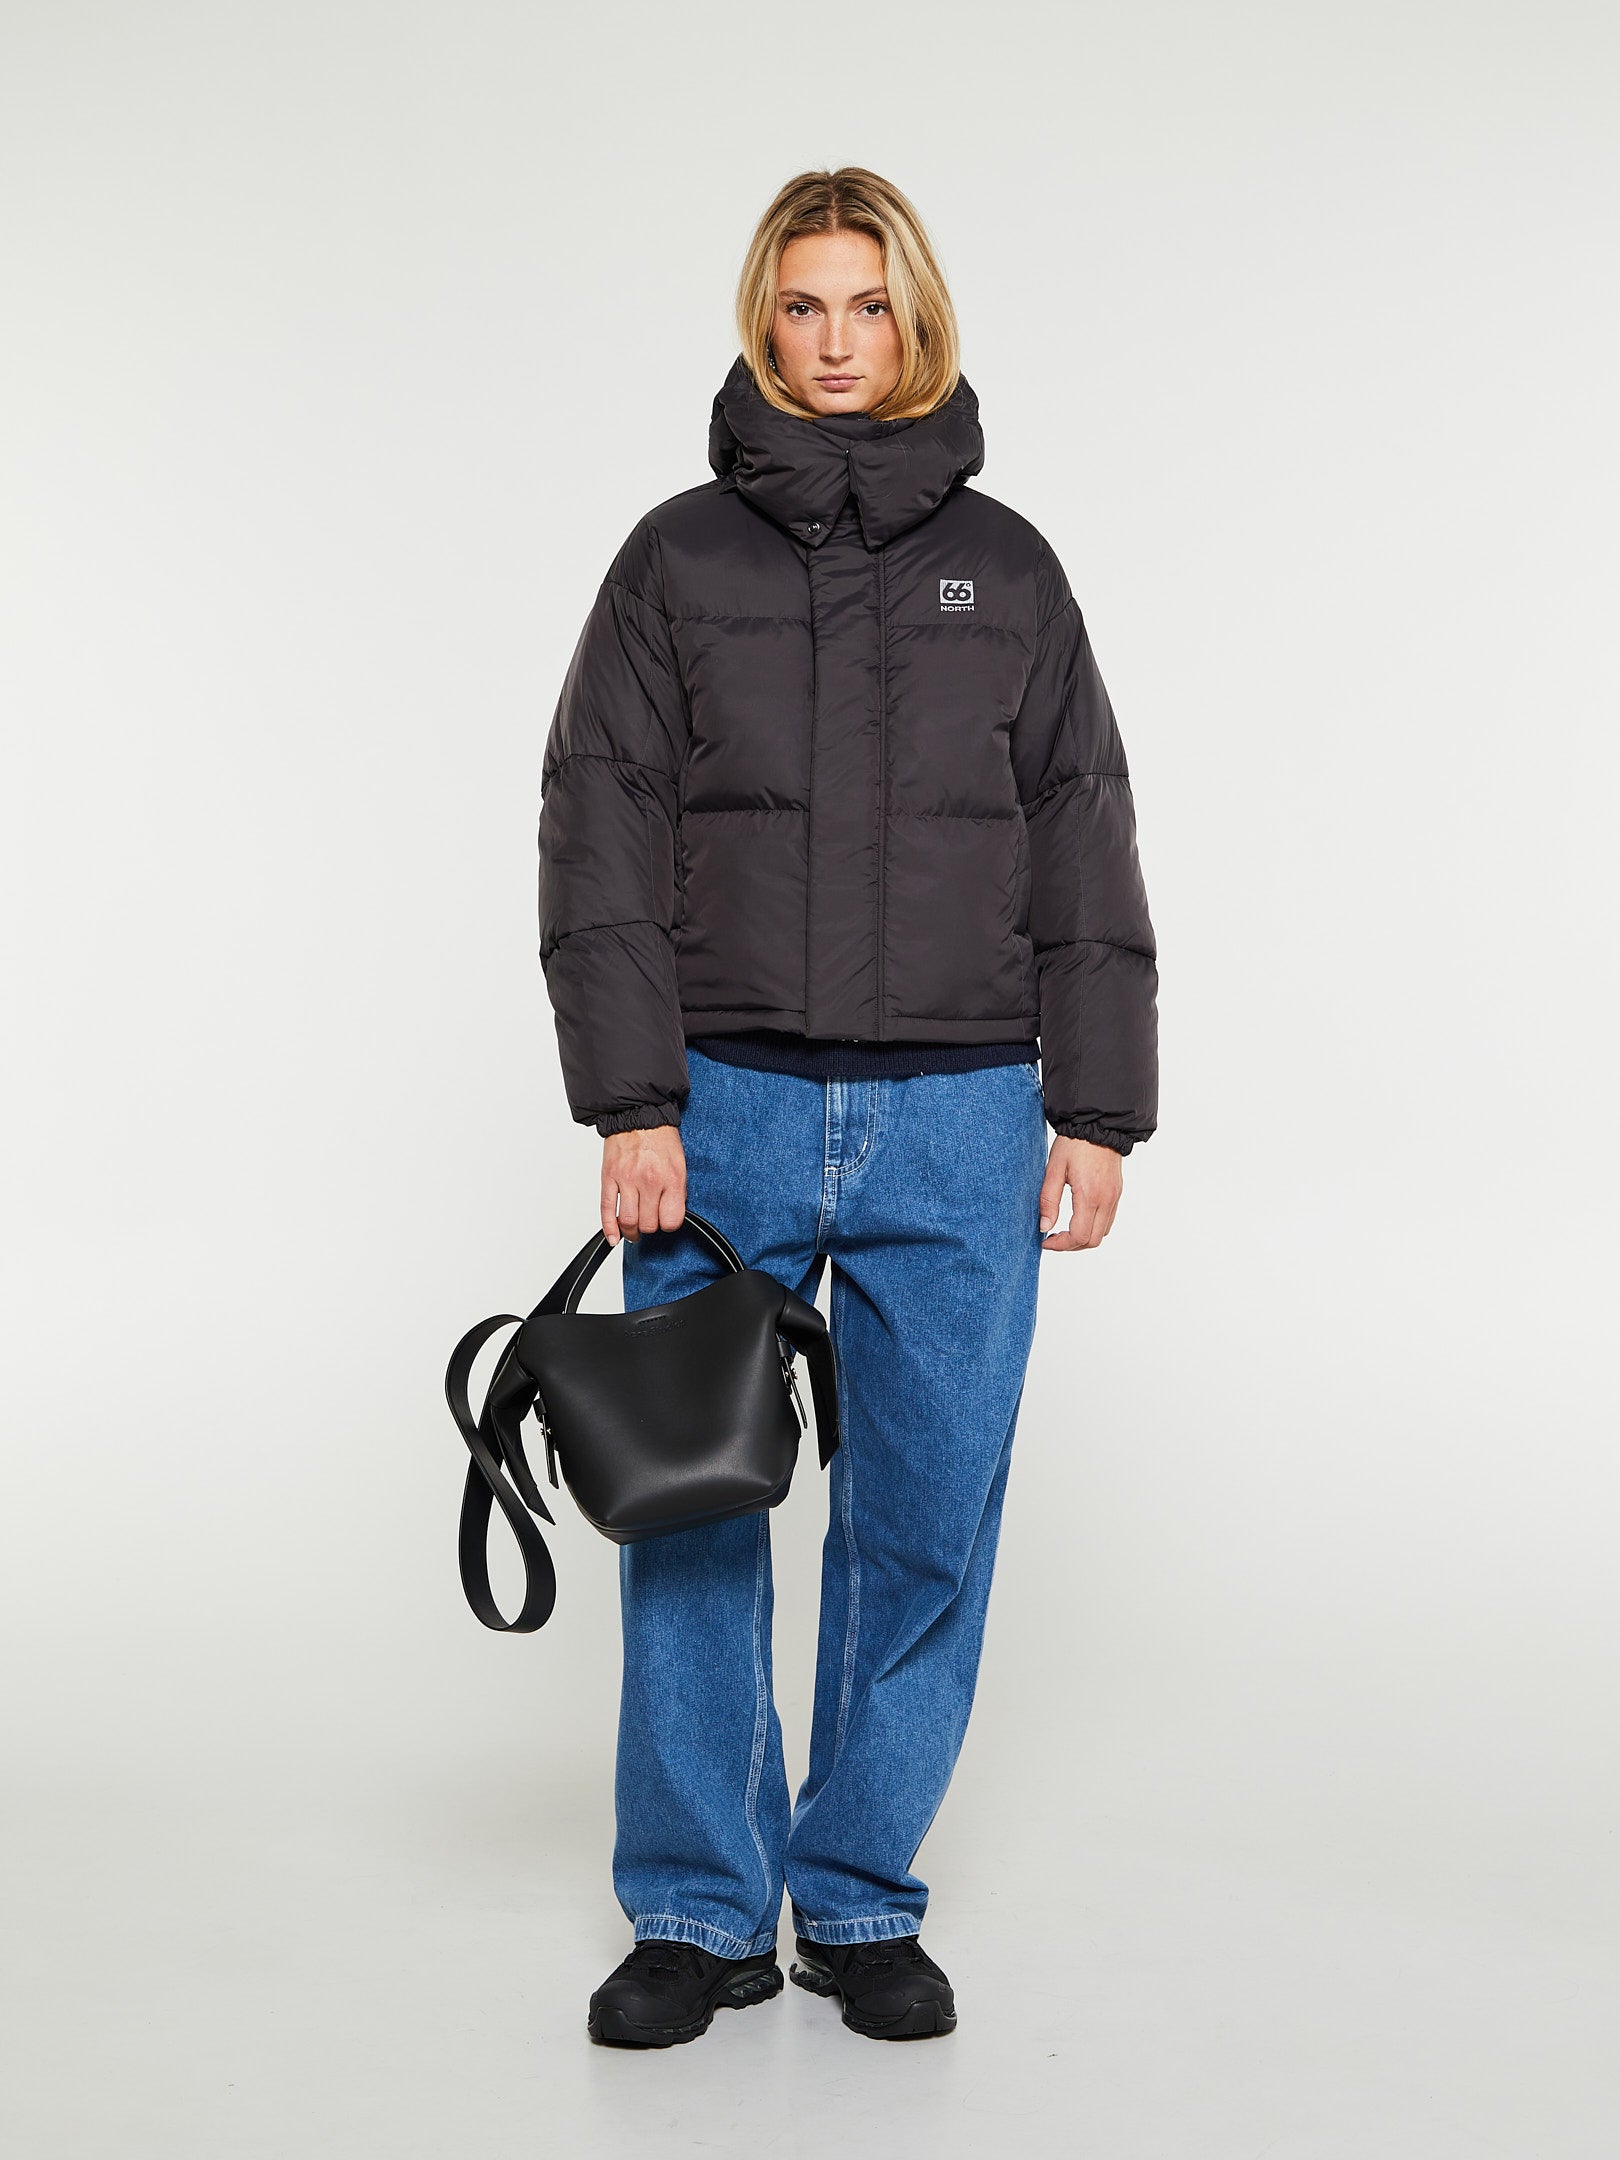 Stoy Brigitta Long Womens Plus Size Puffer Winter Coat Black Sizes 22-26